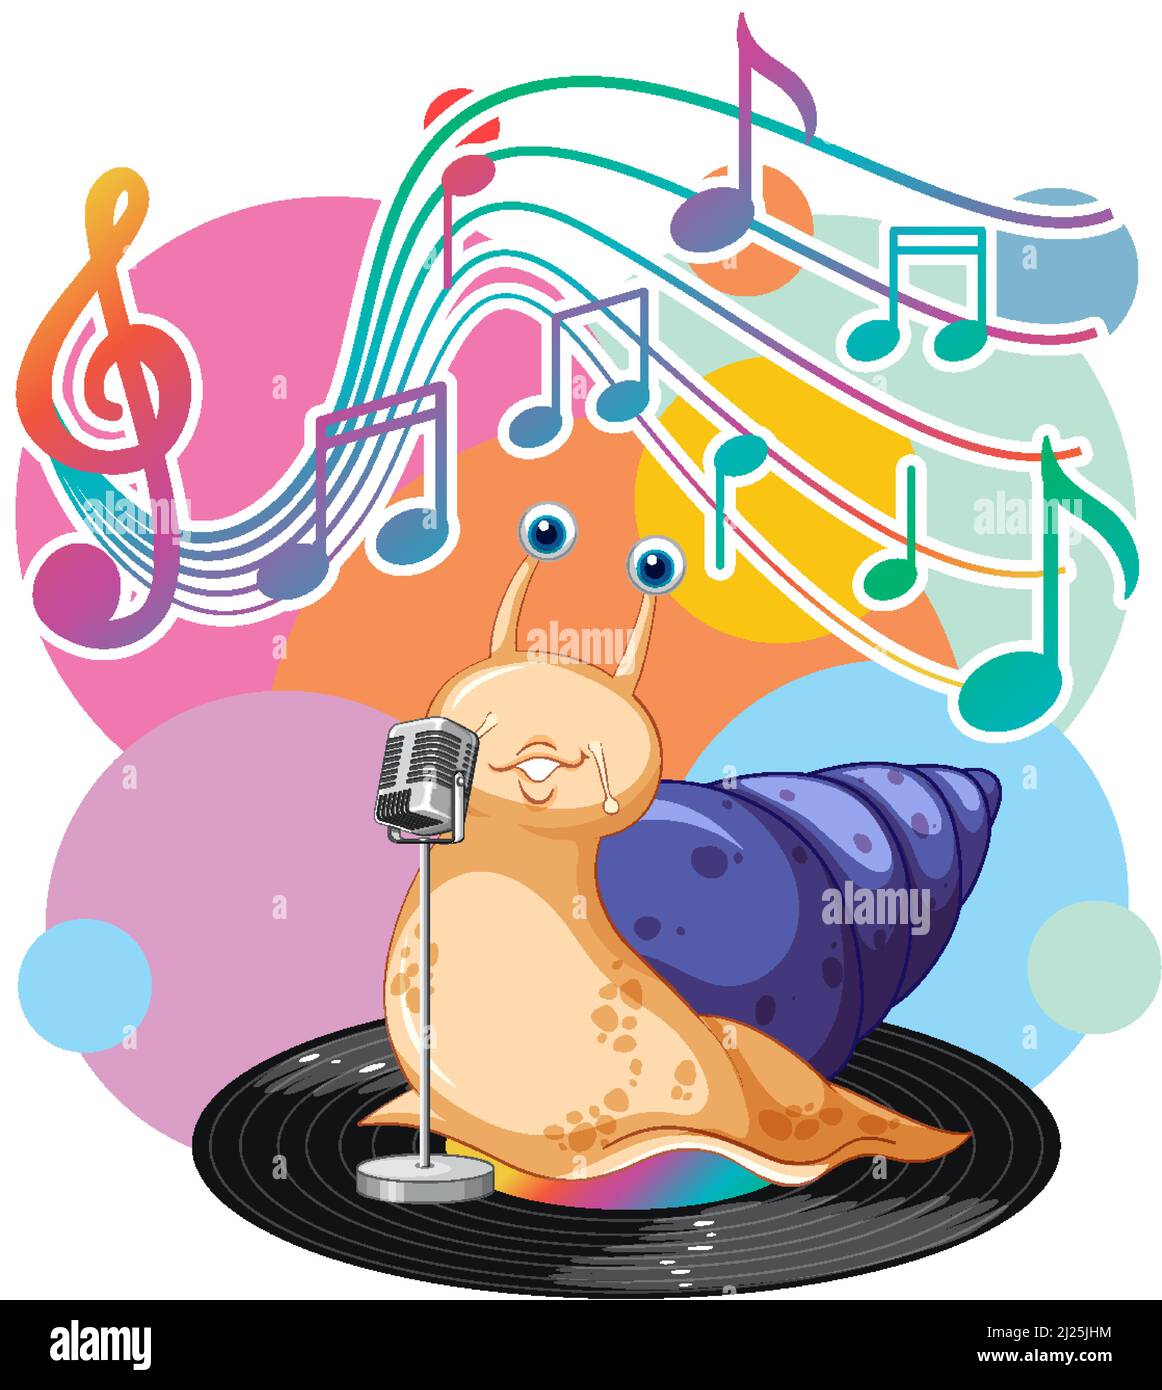 Caracol cantante con música melodía símbolos ilustración de dibujos  animados Imagen Vector de stock - Alamy